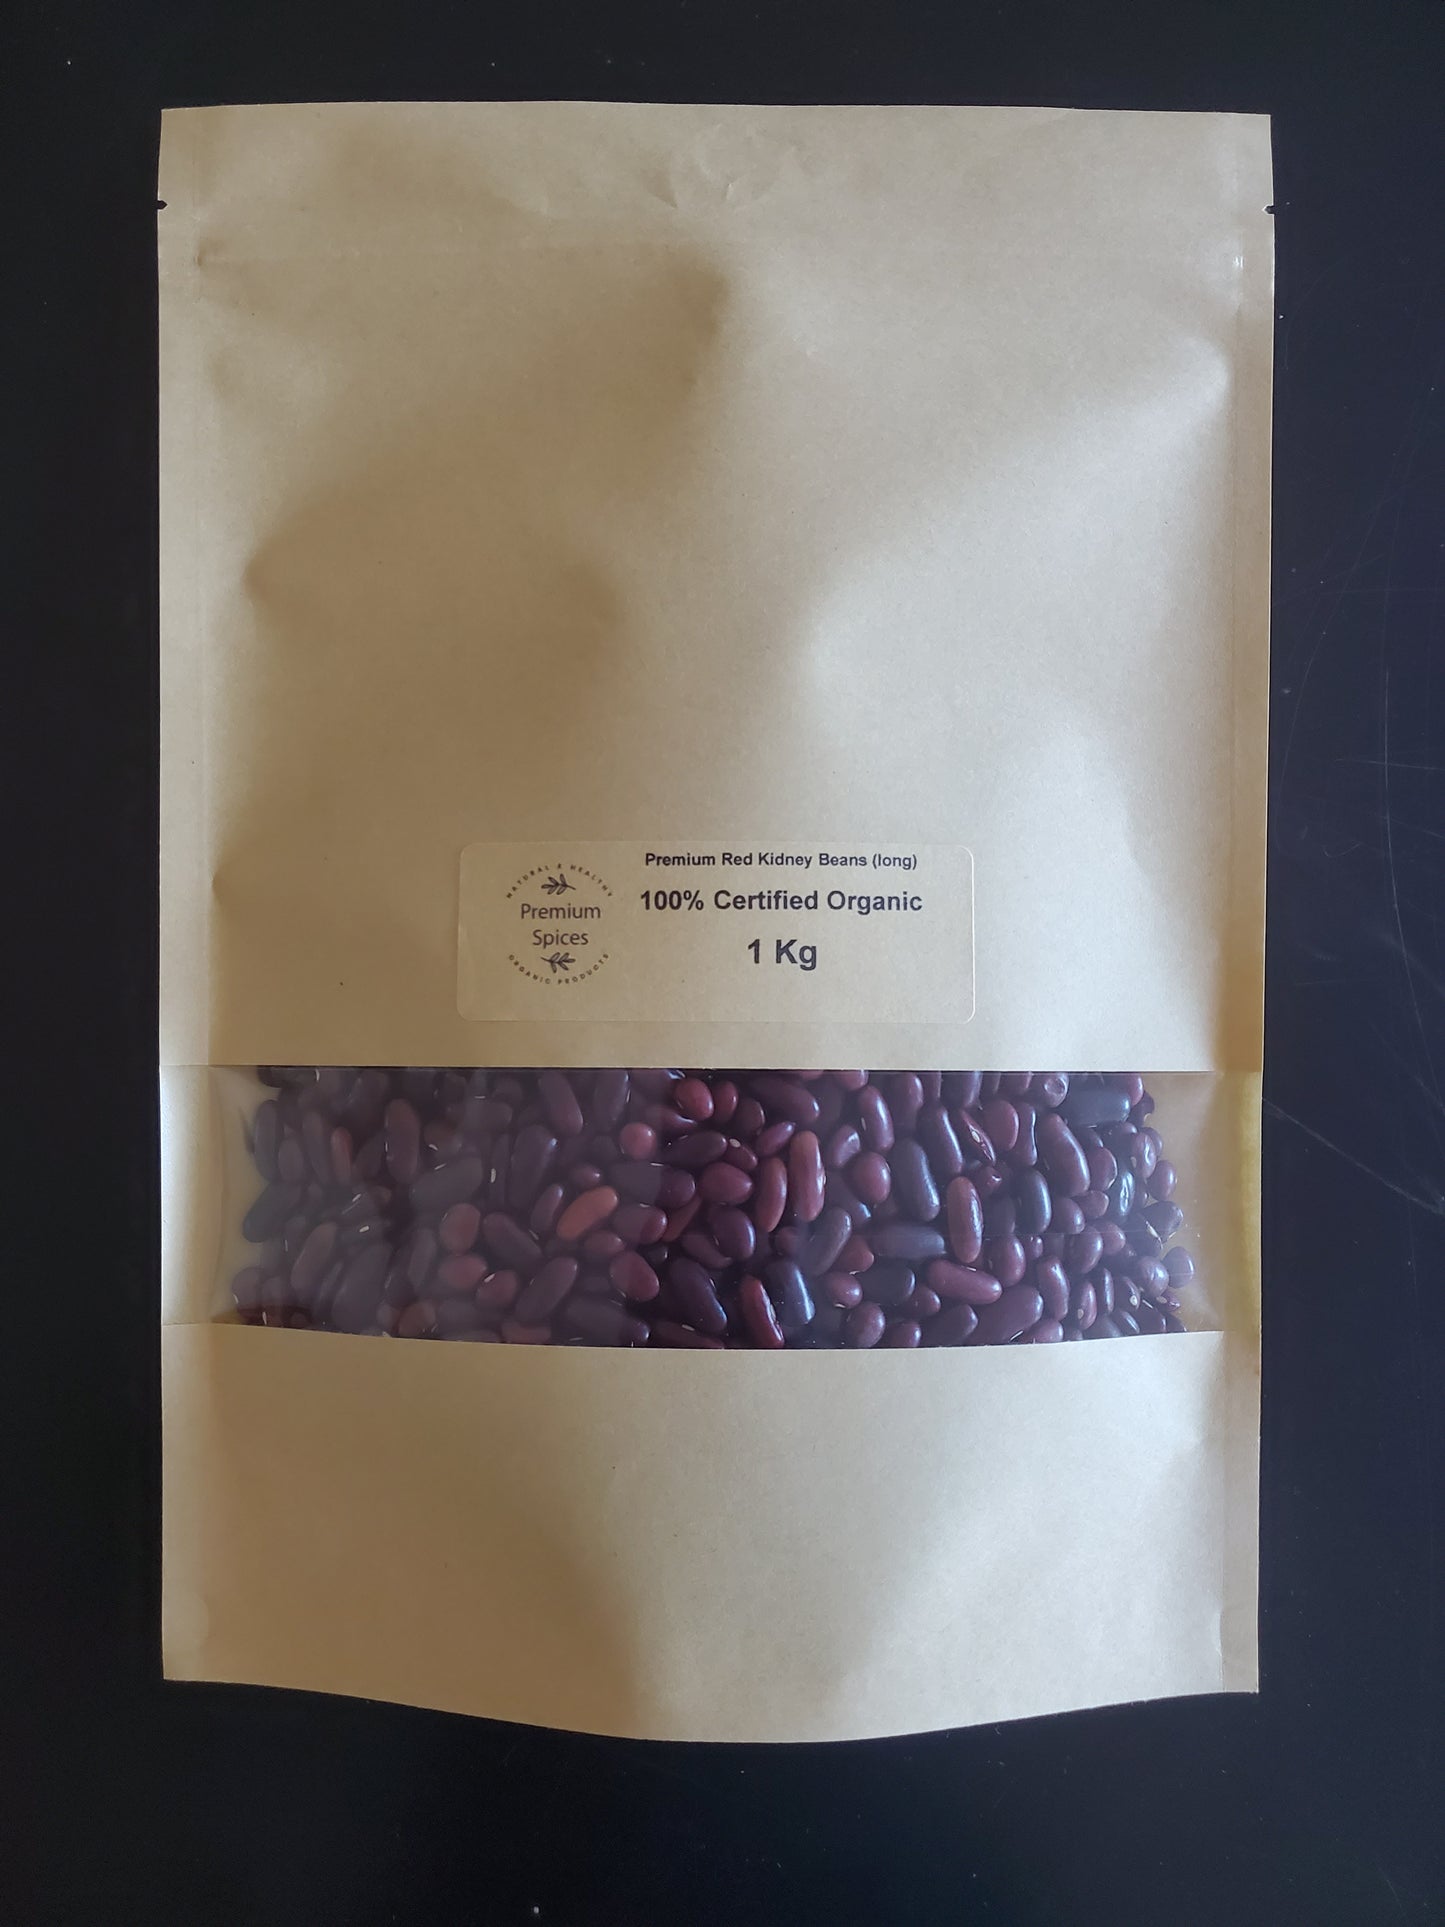 Premium Organics Red Kidney Beans (long) 100% Certified Organic